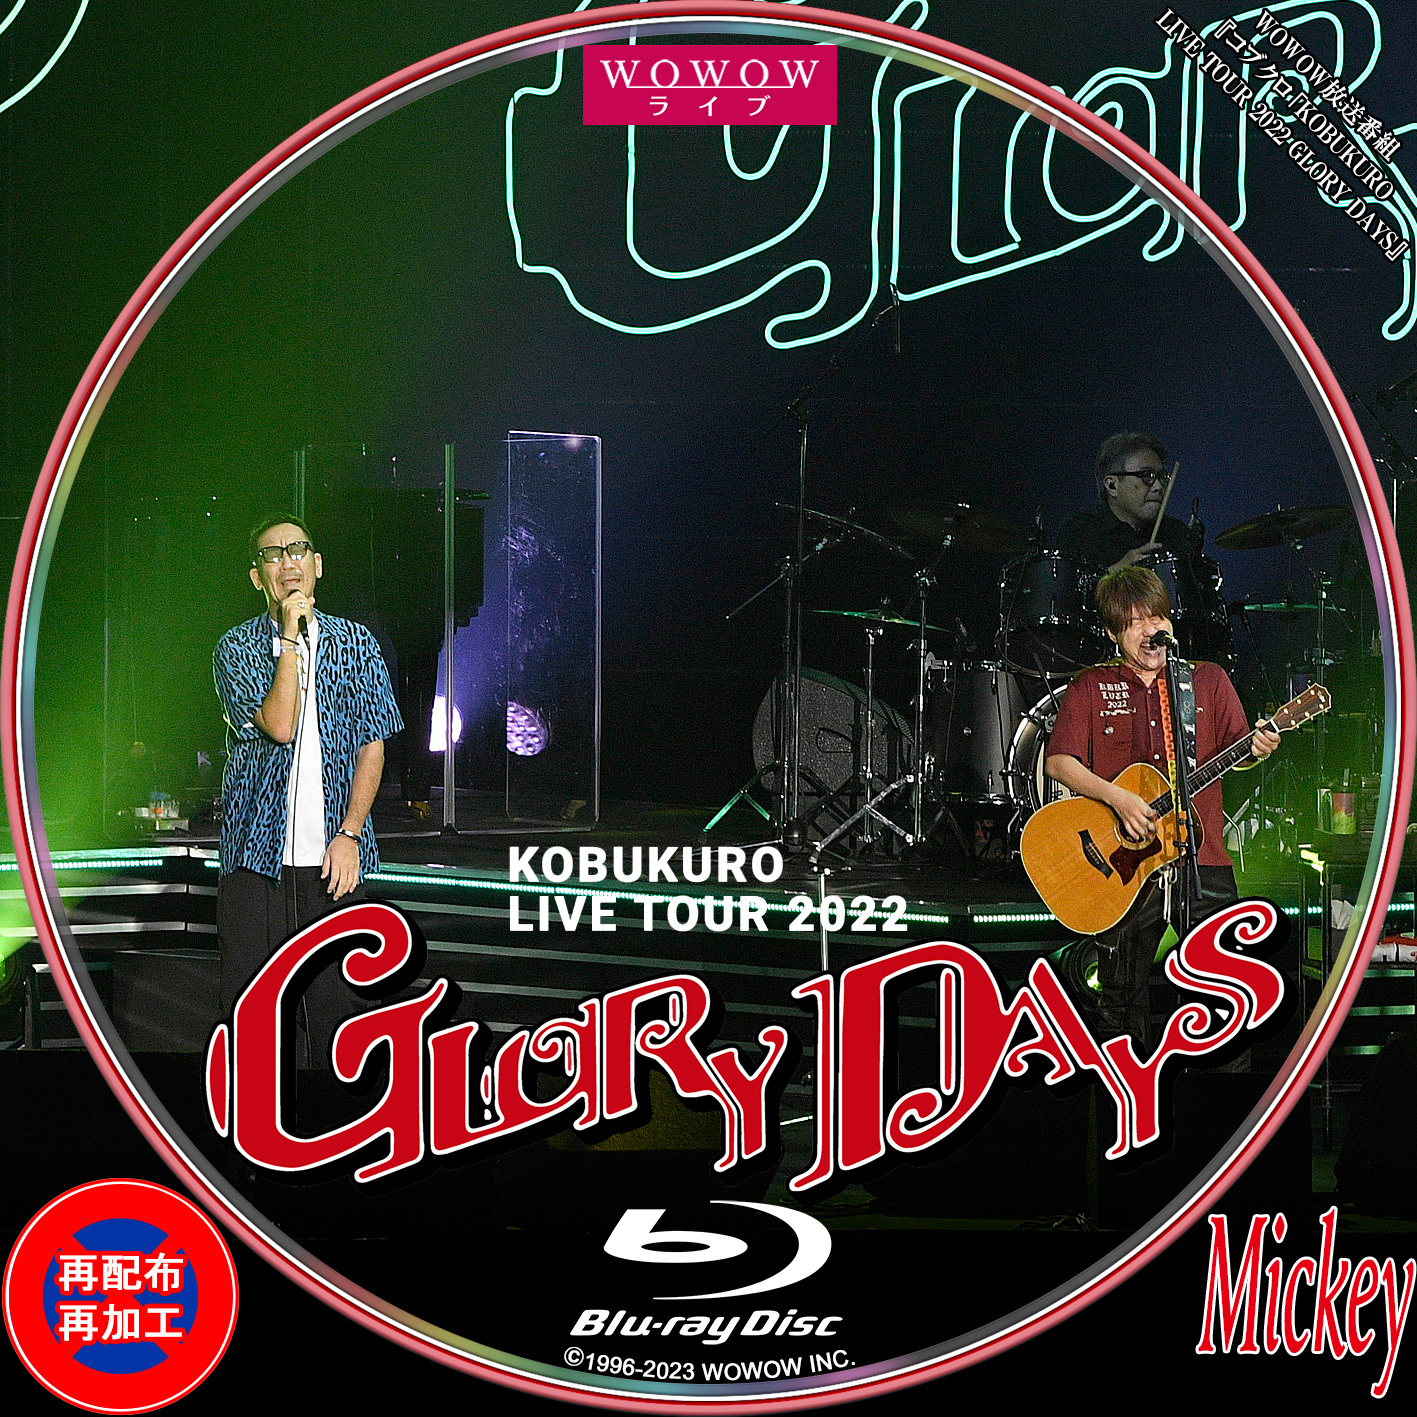 DVD/ブルーレイコブクロライブDVD『奇跡』『心』2枚セット - ミュージック